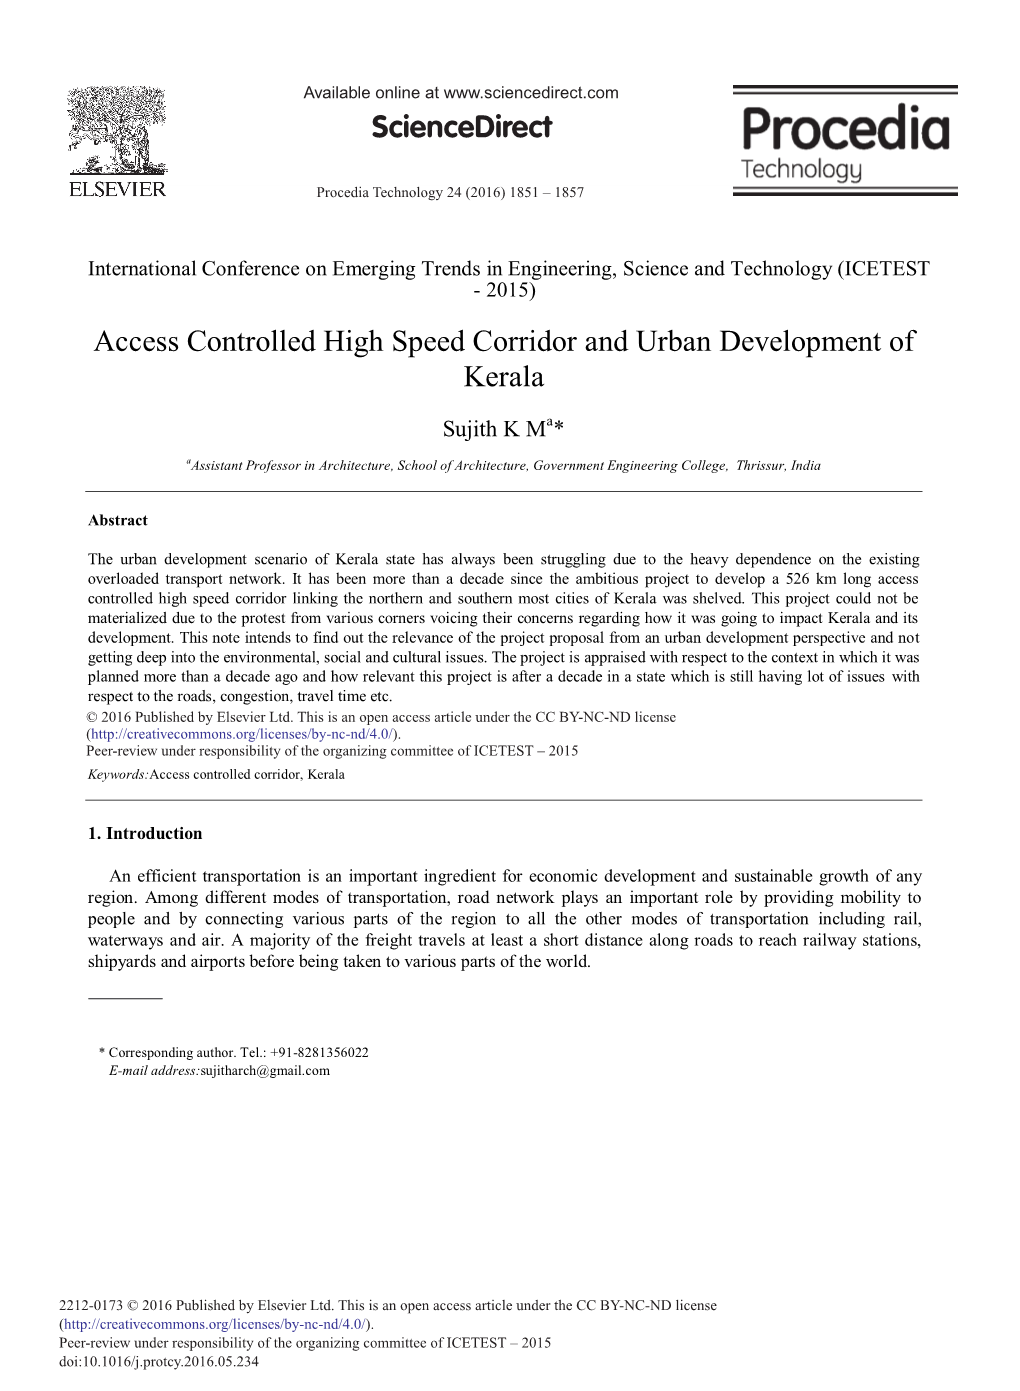 Access Controlled High Speed Corridor and Urban Development of Kerala